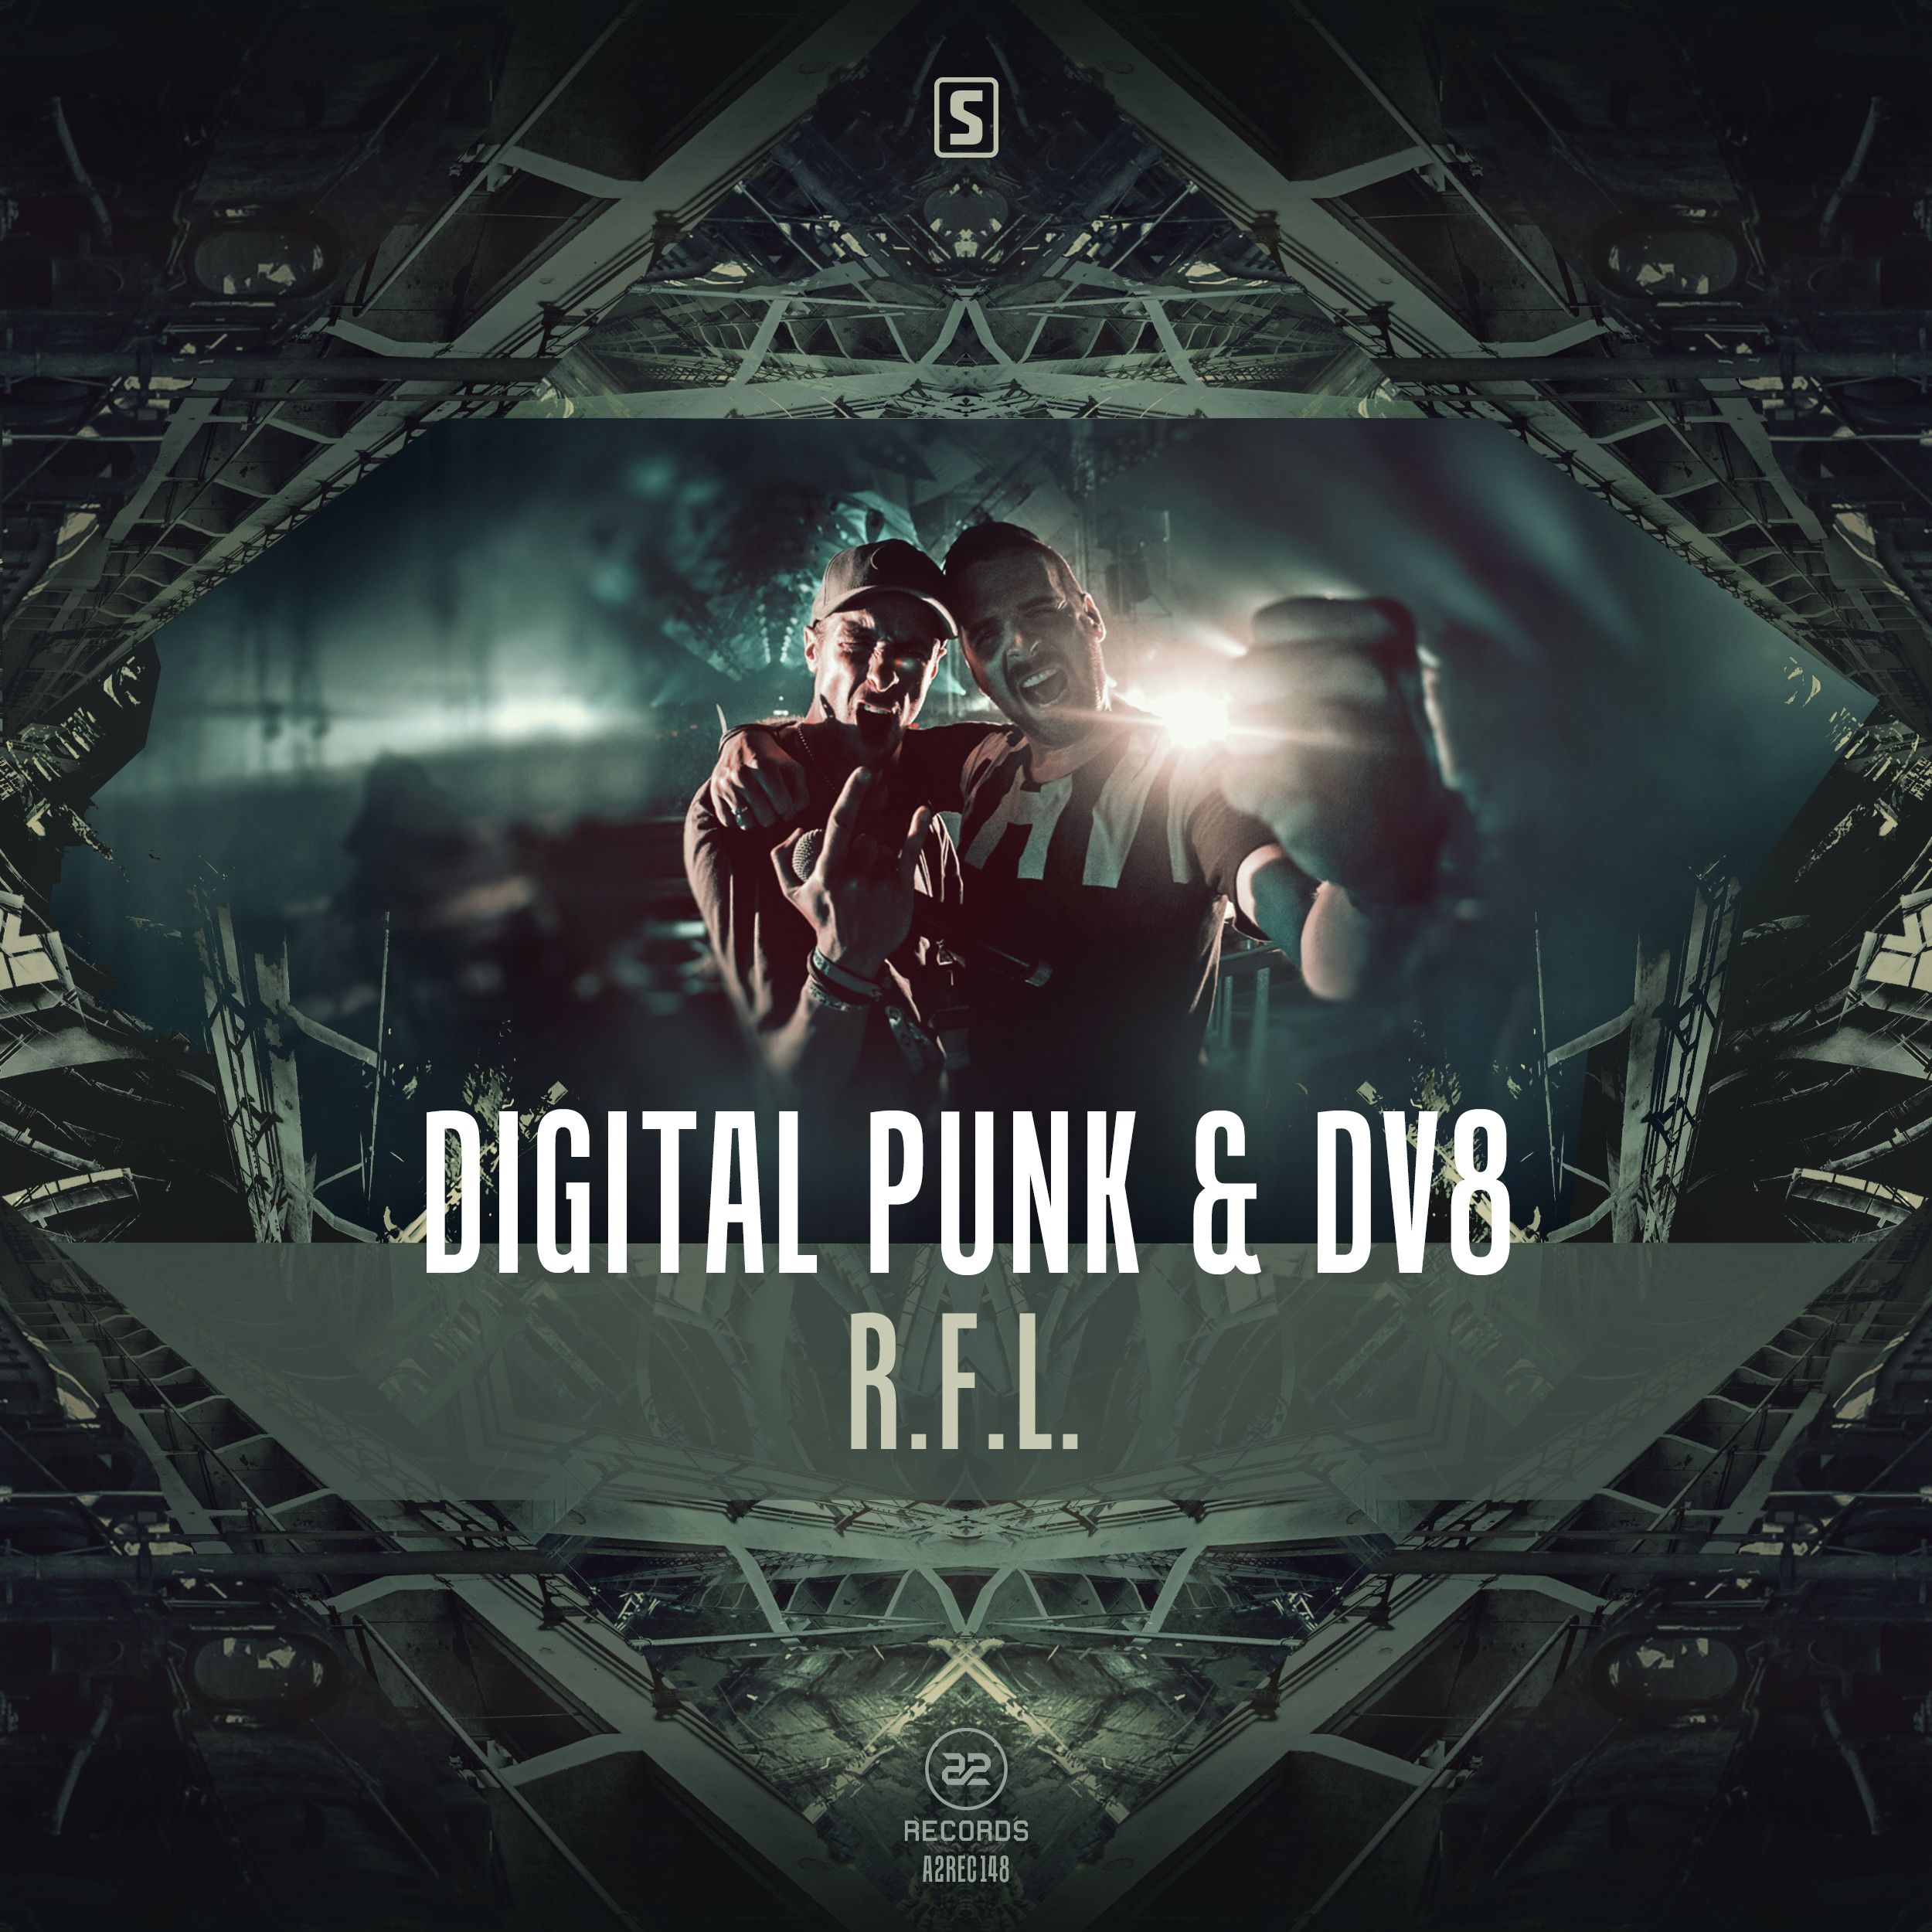 Digital Punk & DV8 - R.F.L. [A2 Records] - Harderstate - Hardstyle ...